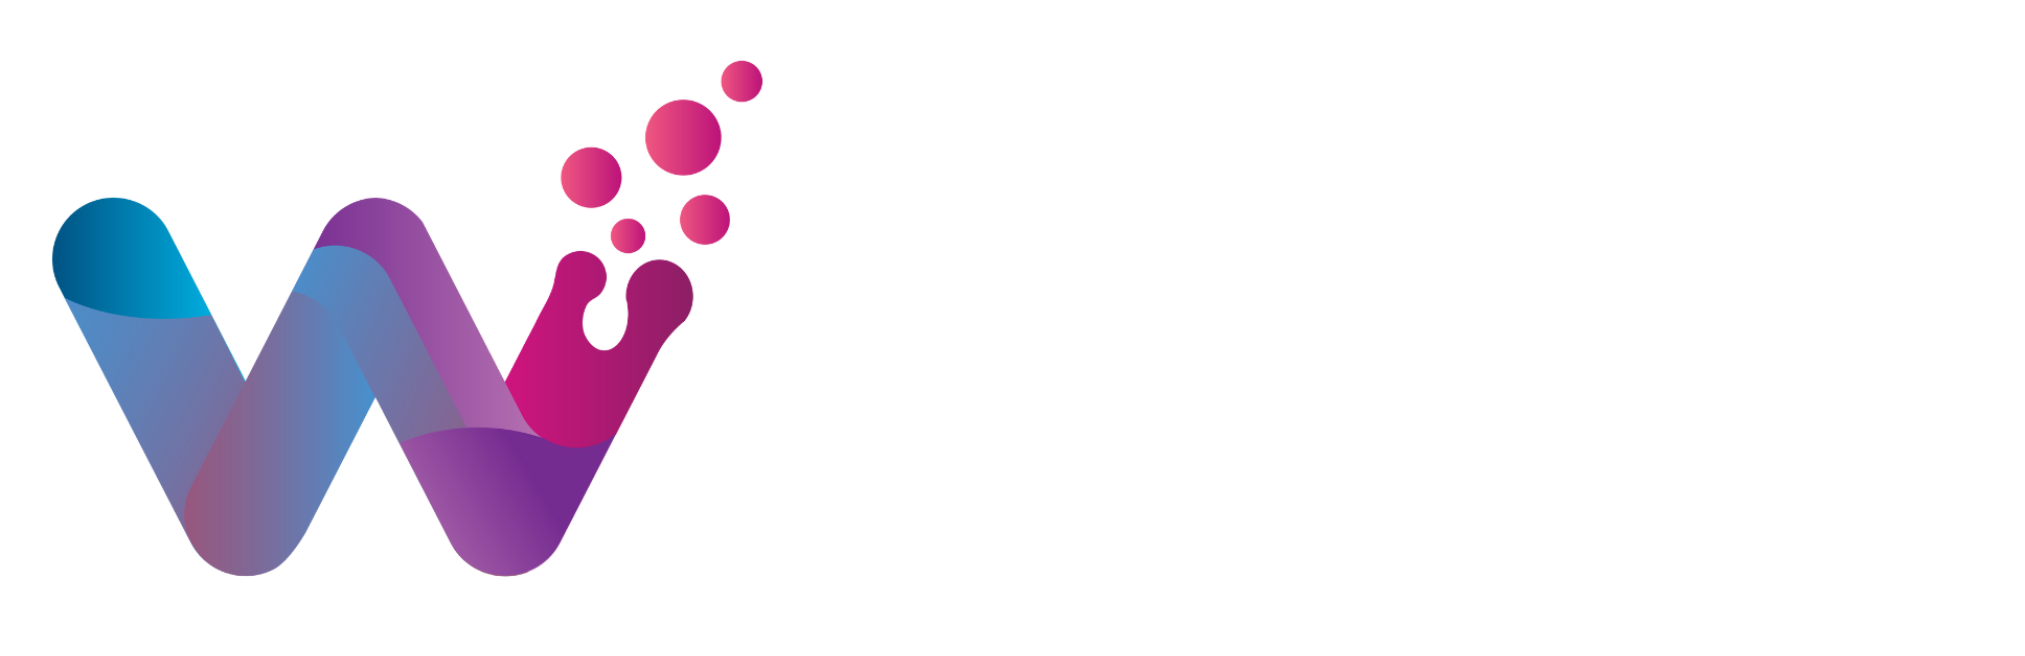 Web Crafser - Web Crafter Service